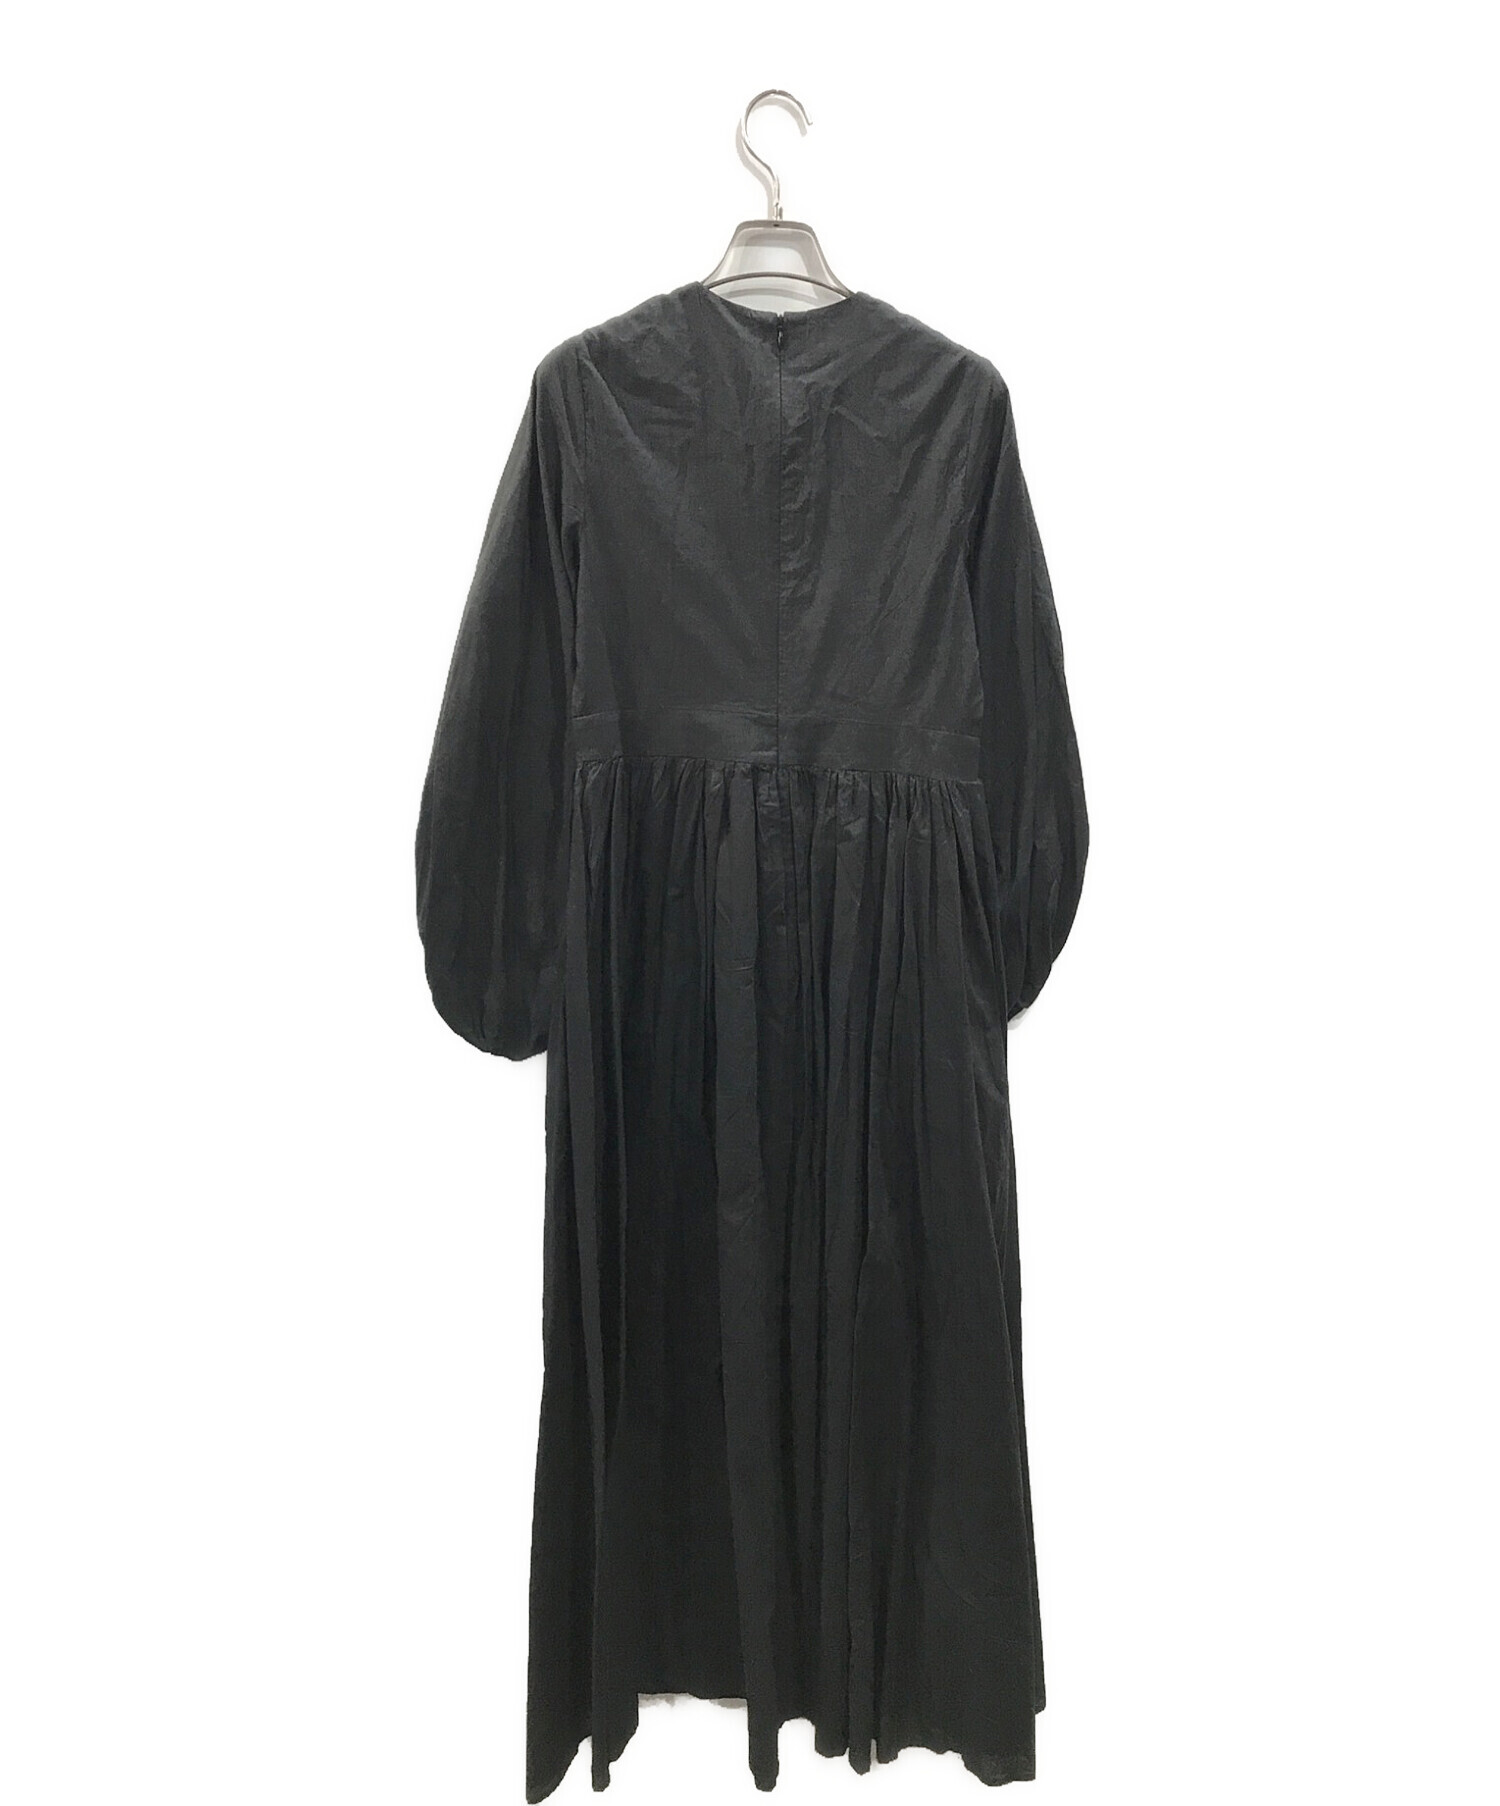 MARIHA (マリハ) 少女の祈りのドレス ブラック サイズ:36